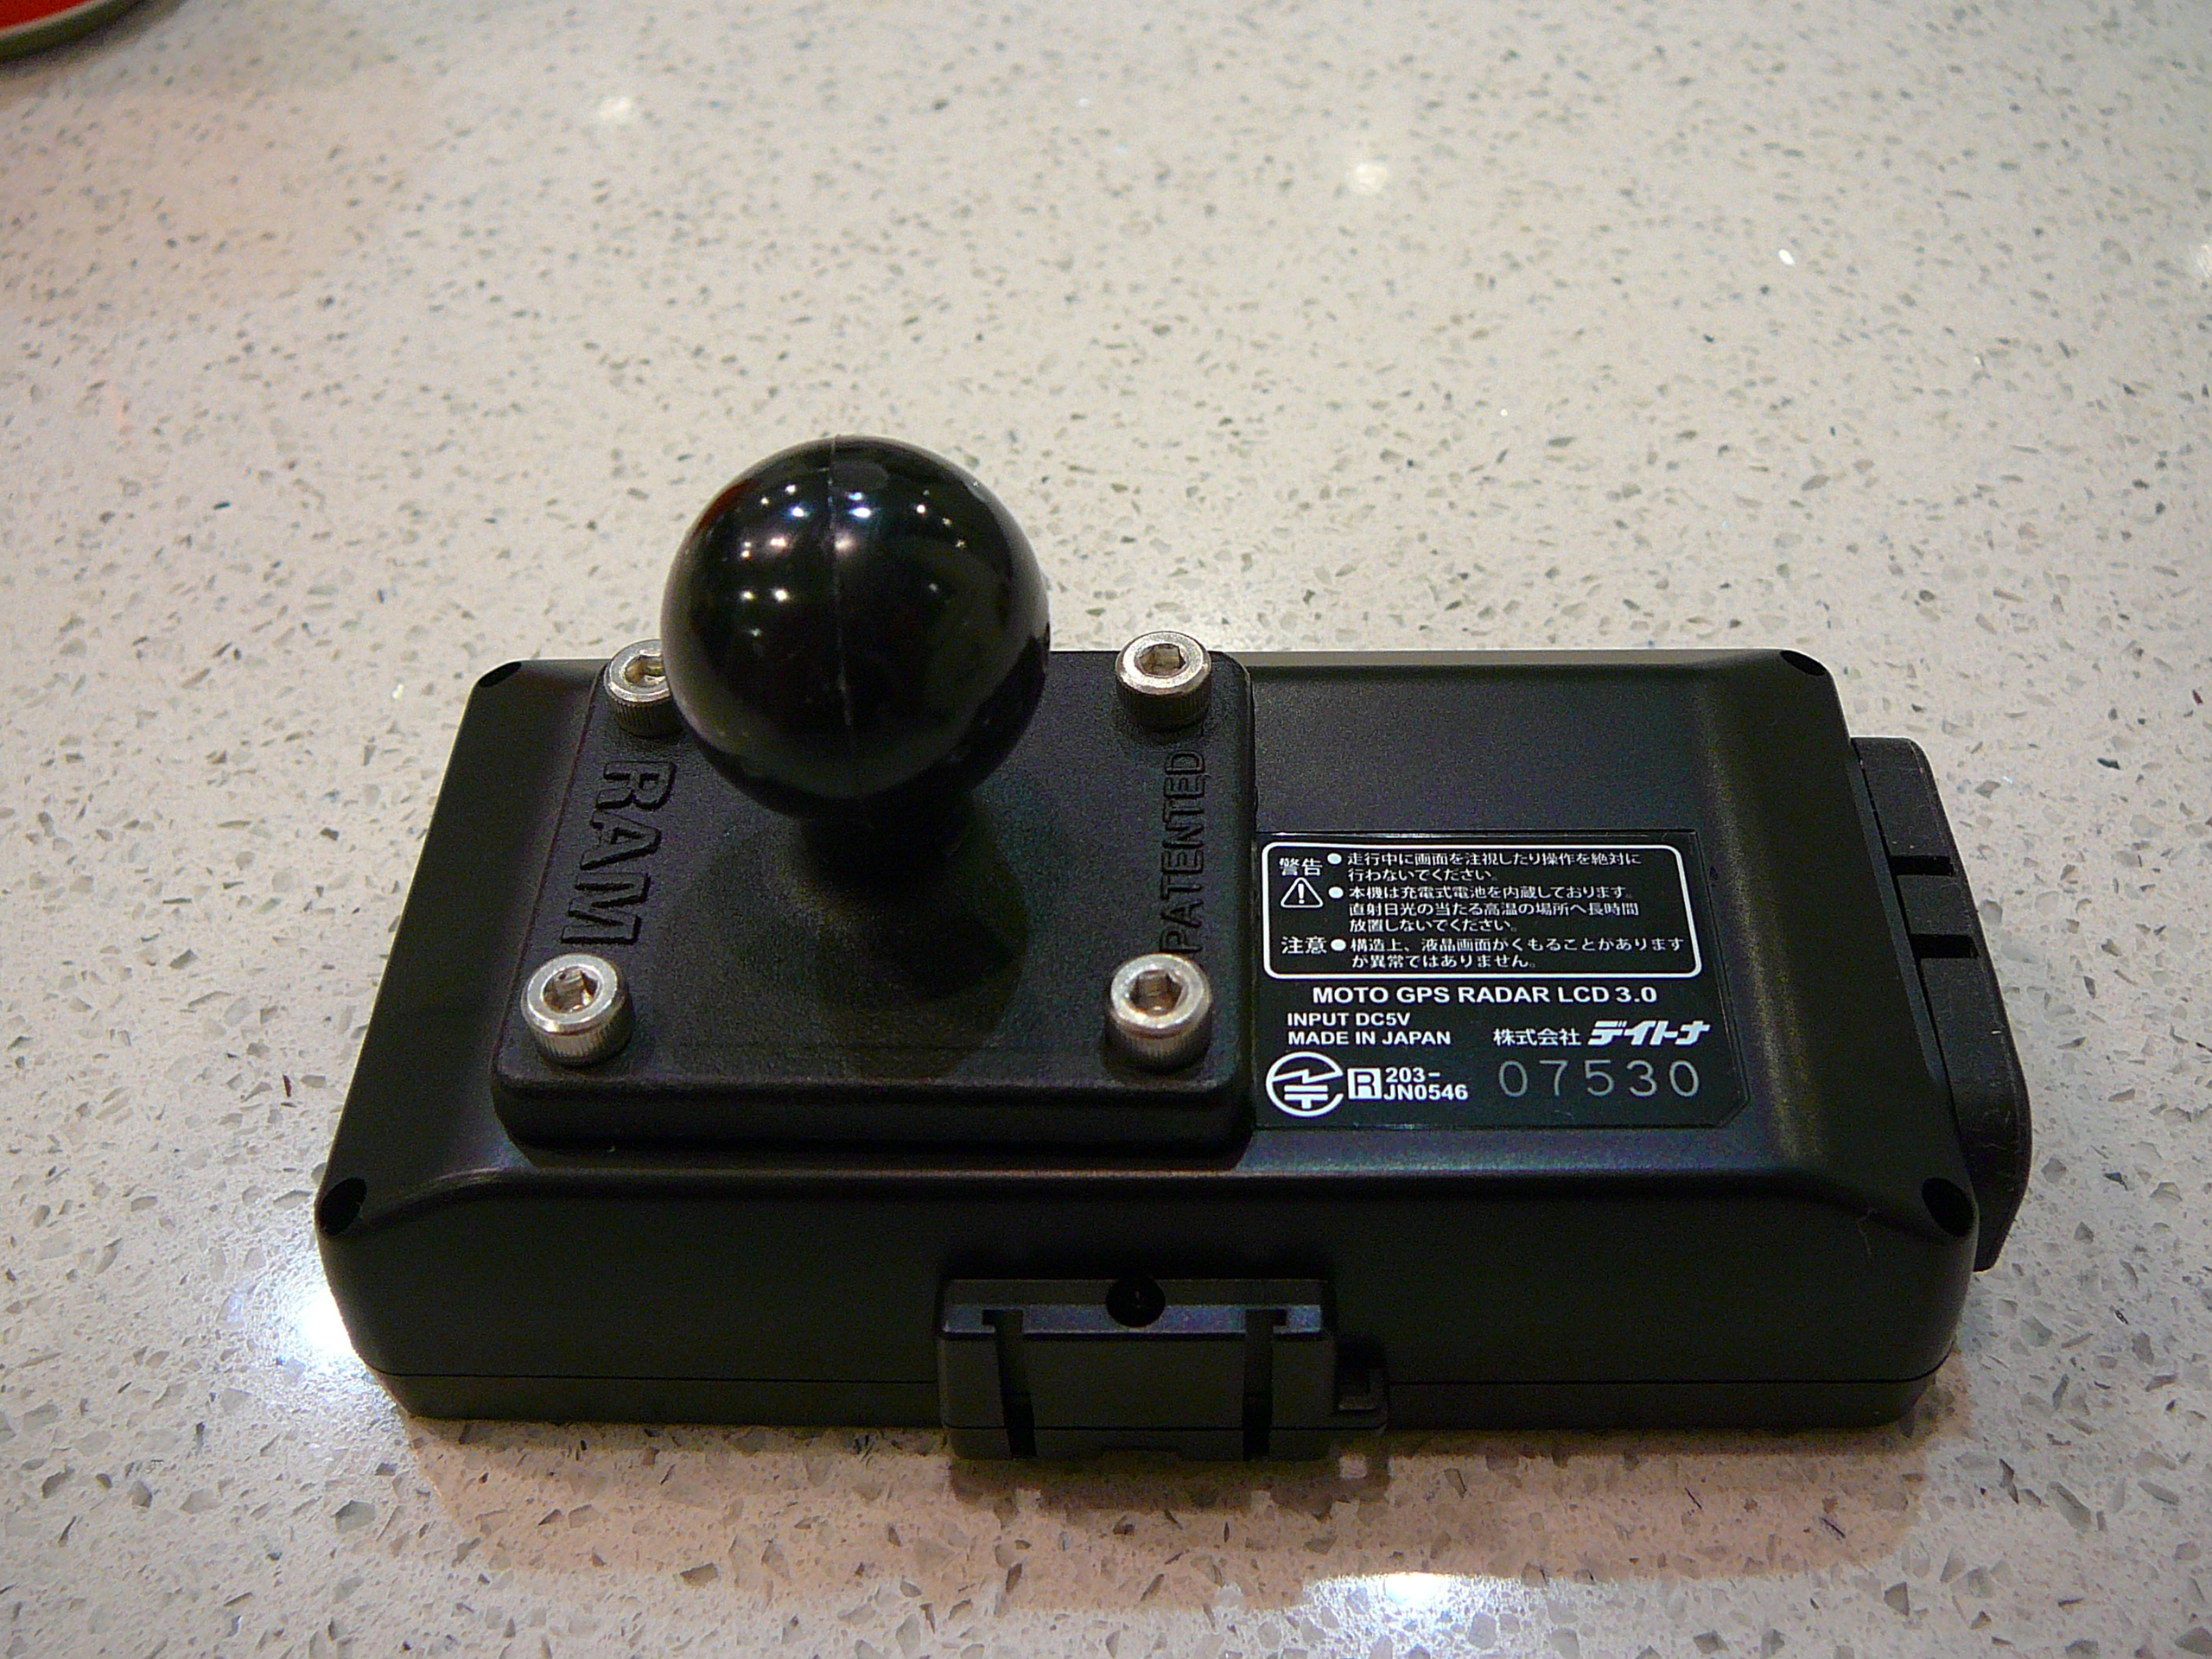 DAYTONA GPSレーダー MOTO GPS RADAR LCD 3.0: CBR250RR MC51 77号熊本 